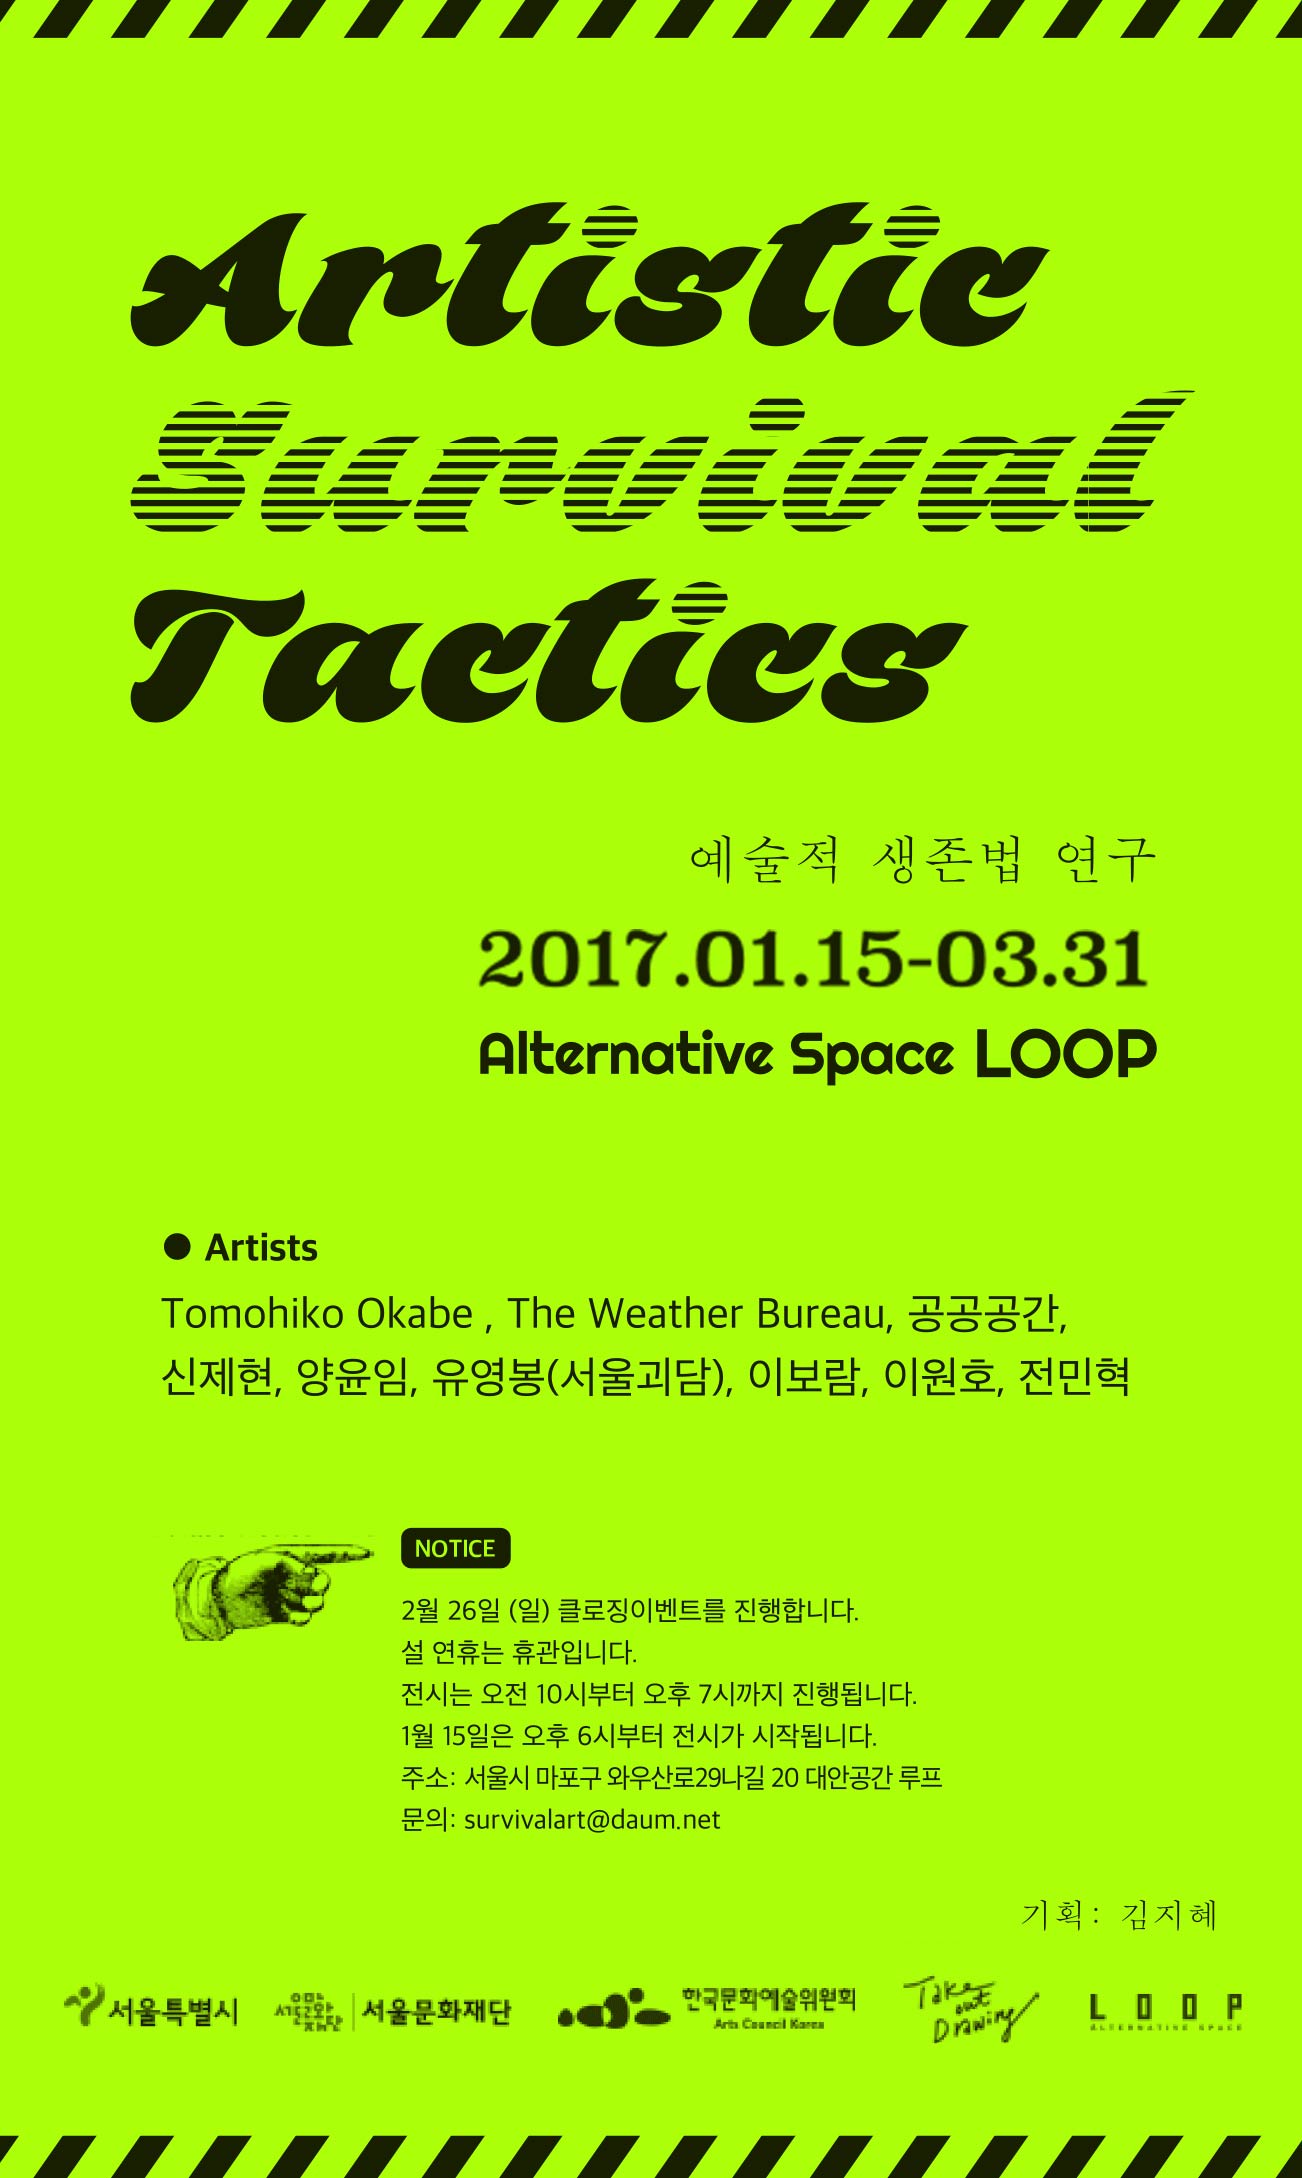 Artistic Survival Tactics: Tomohiko Okabe: KOTO-LAB, The Weather Bureau, Lee Wonho, Jeon Minhyuk, Shin Jehyun, Yang Yoonim, Yi Boram, Yoo Youngbong: Seoul-Kedam and ZERO SPACE